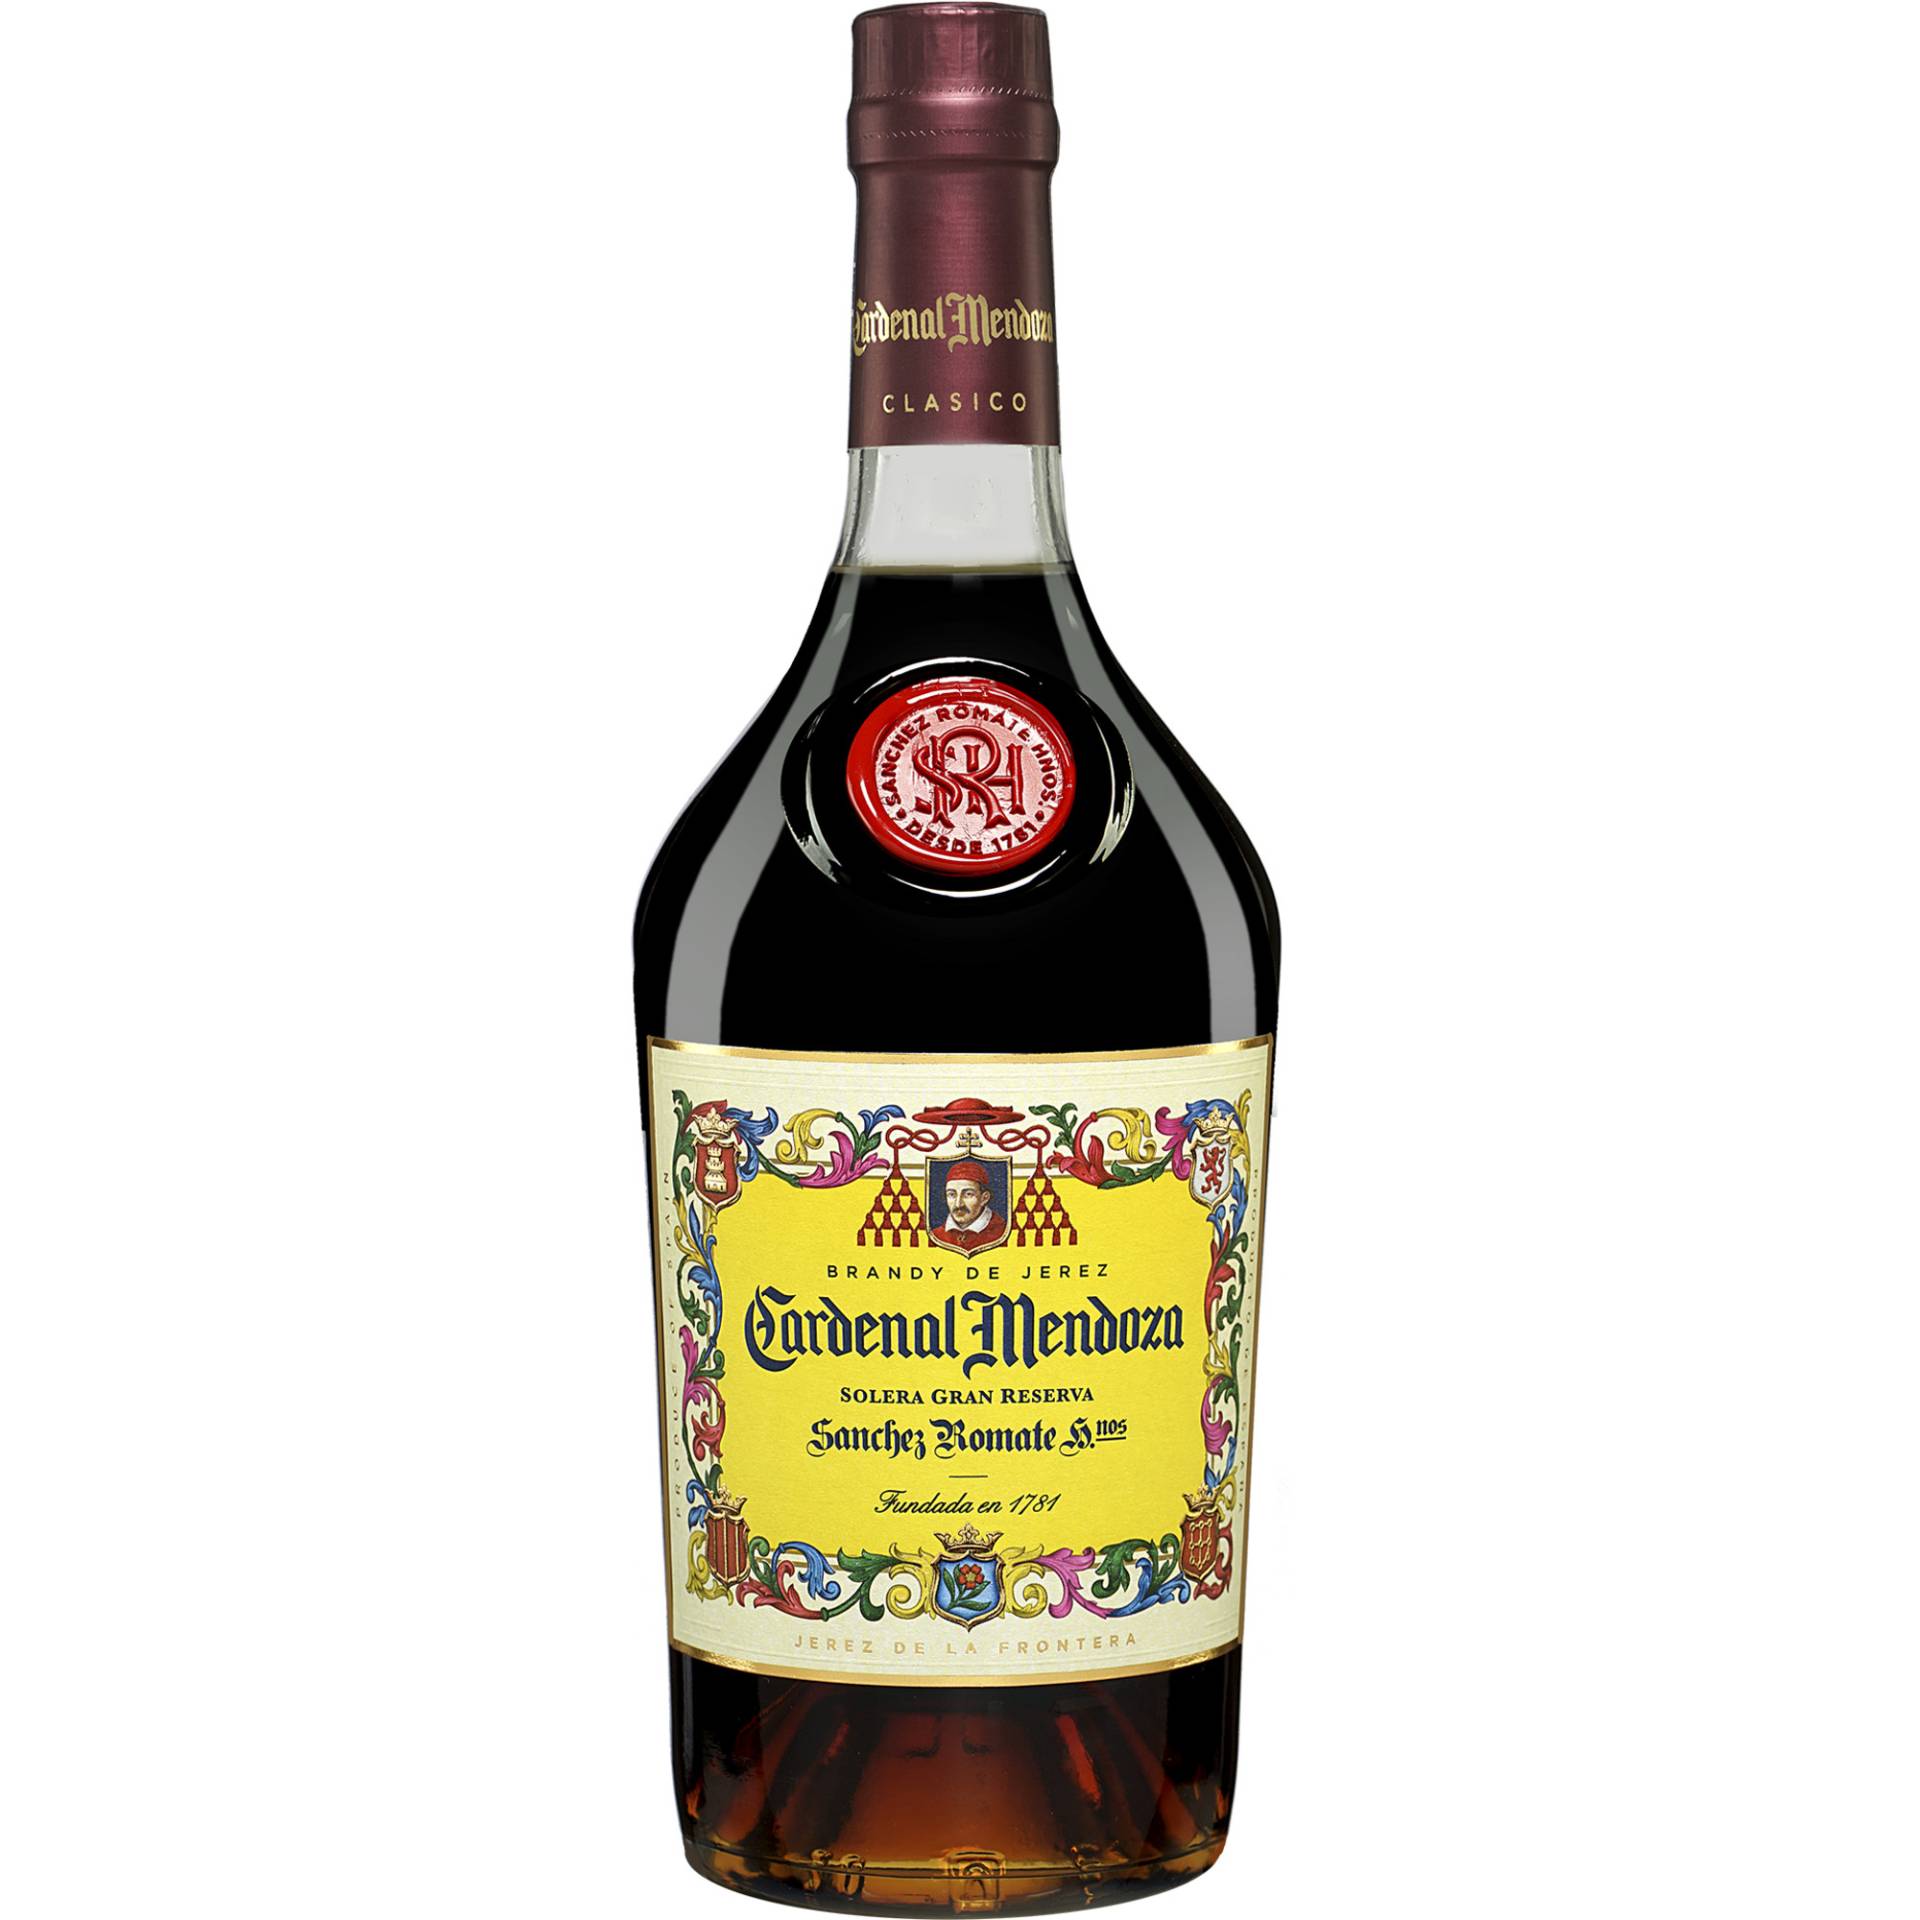 Brandy Cardenal Mendoza Solera Gran Reserva - 0,7 L.  0.7L 40% Vol. Brandy aus Spanien von Romate